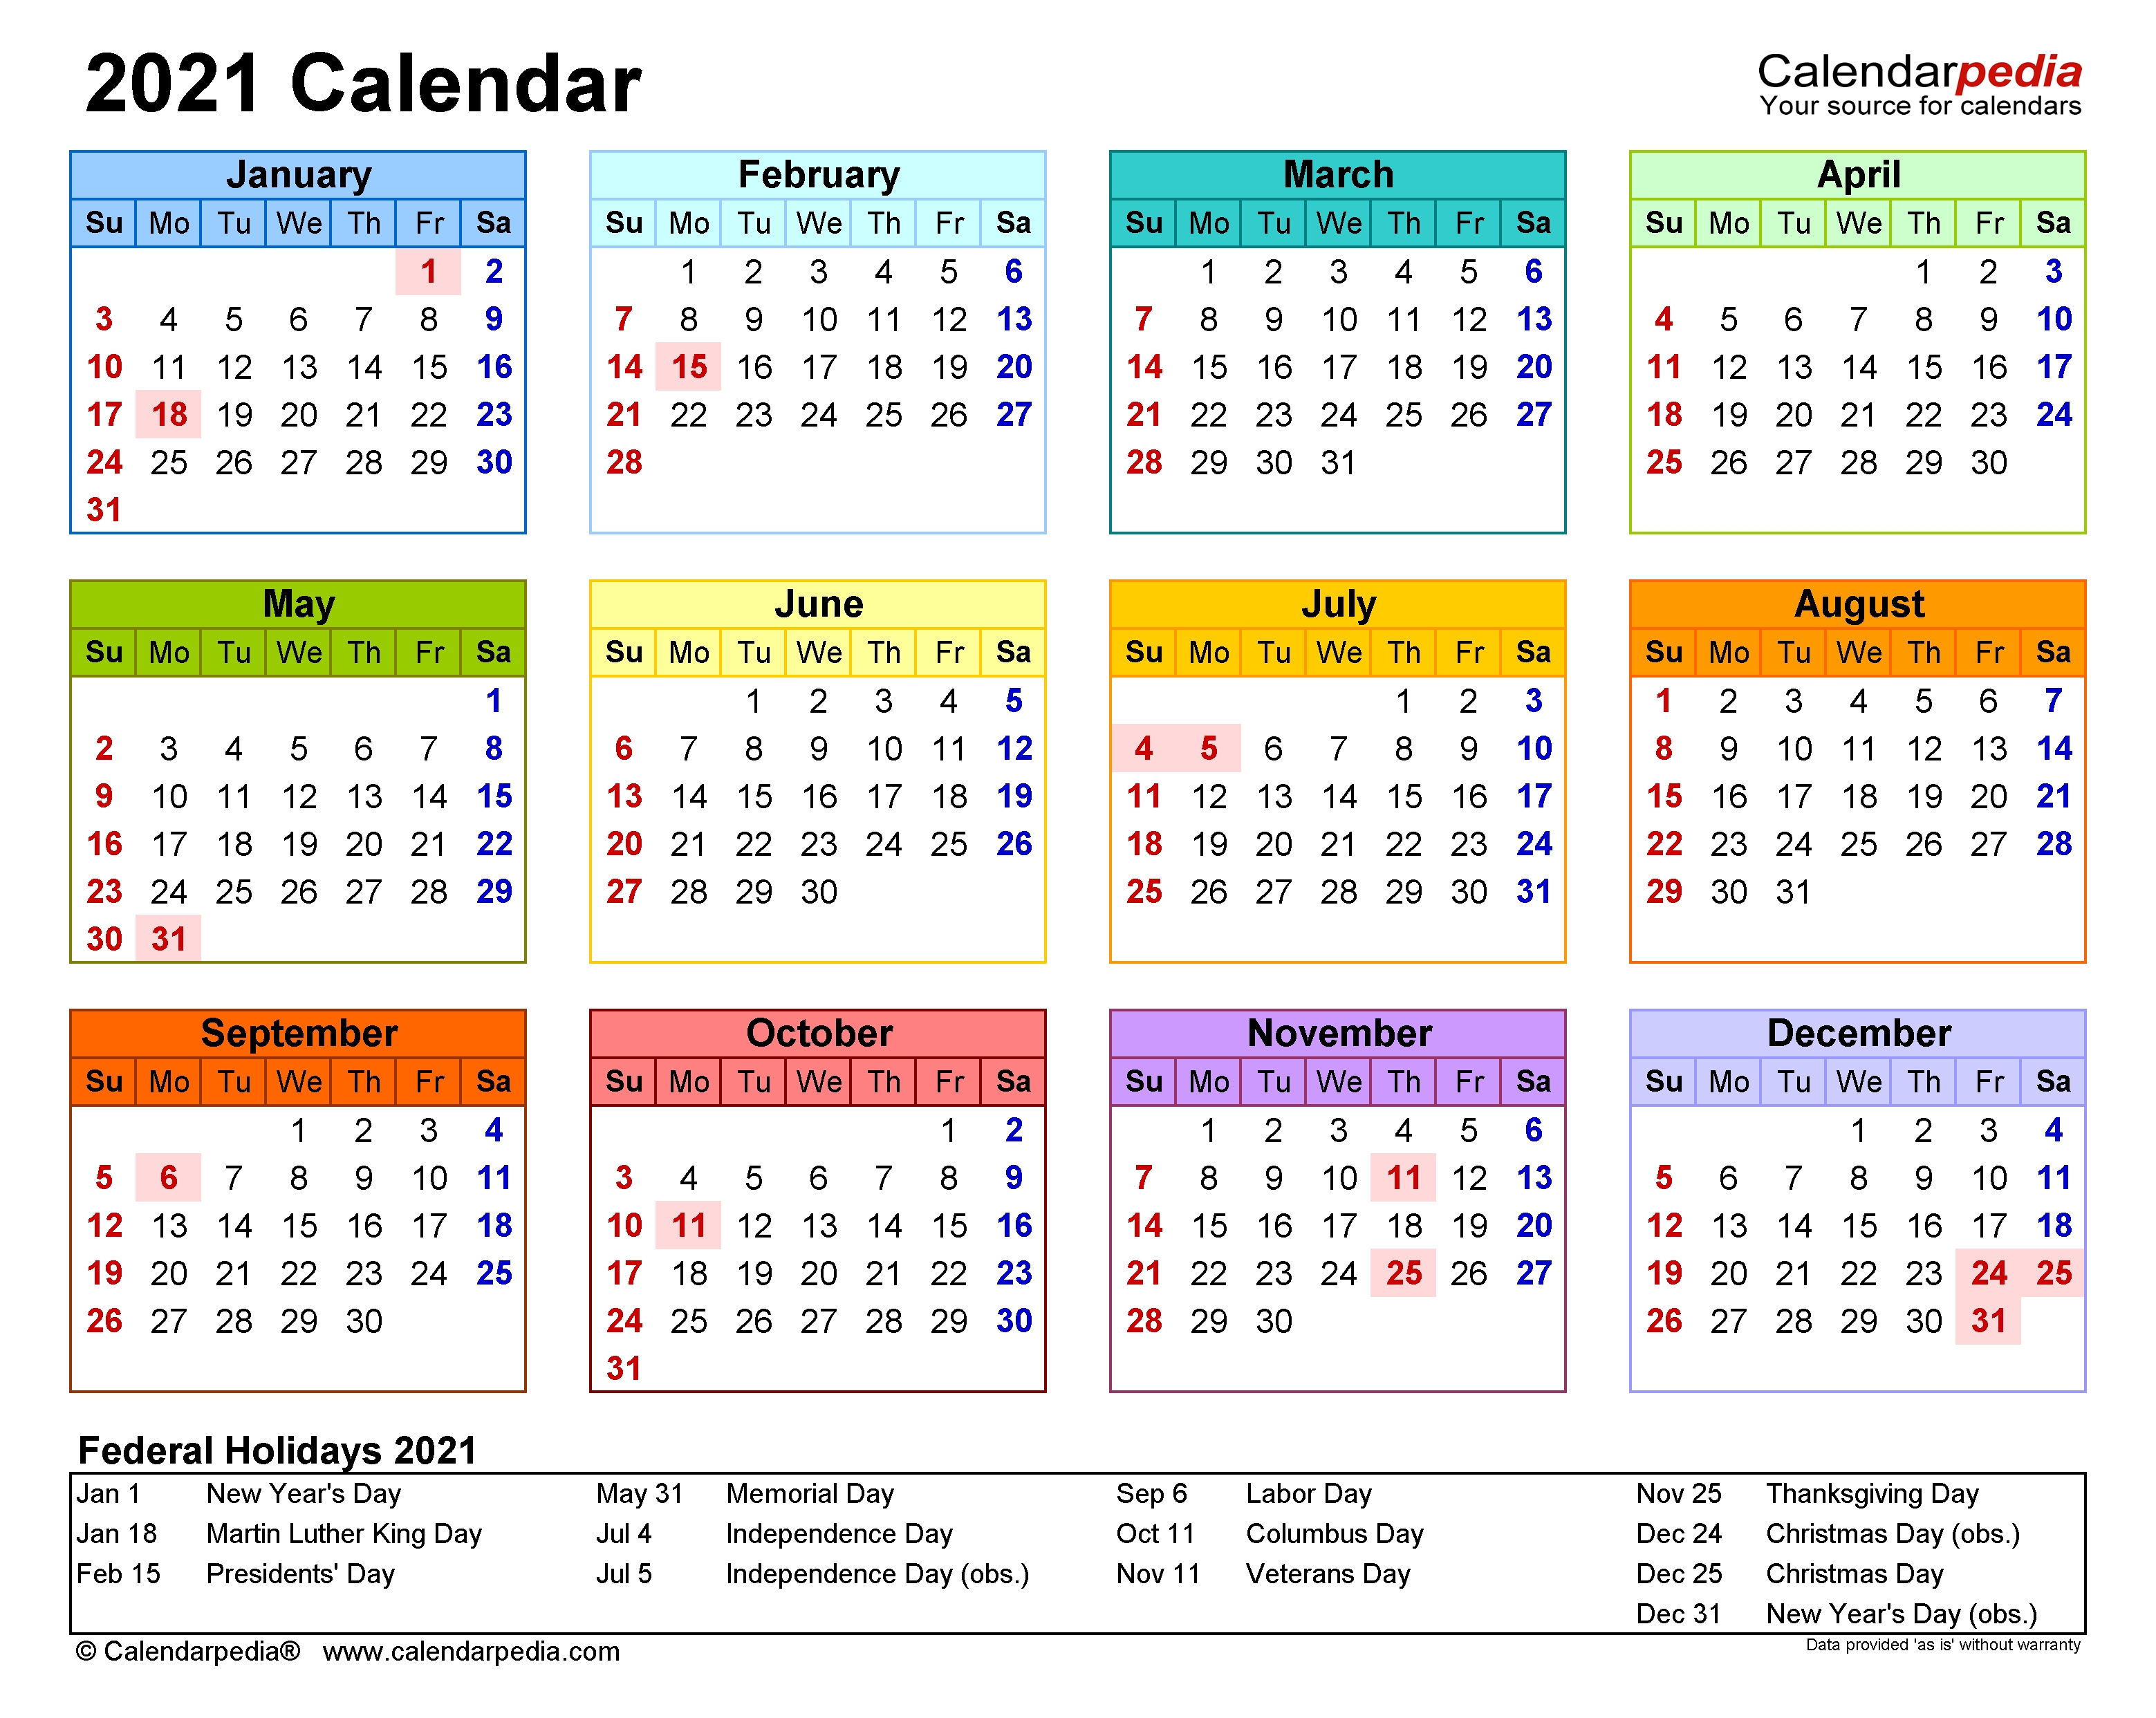 2021 Calendar - Free Printable Excel Templates - Calendarpedia 2021 Calendar In Excel Free